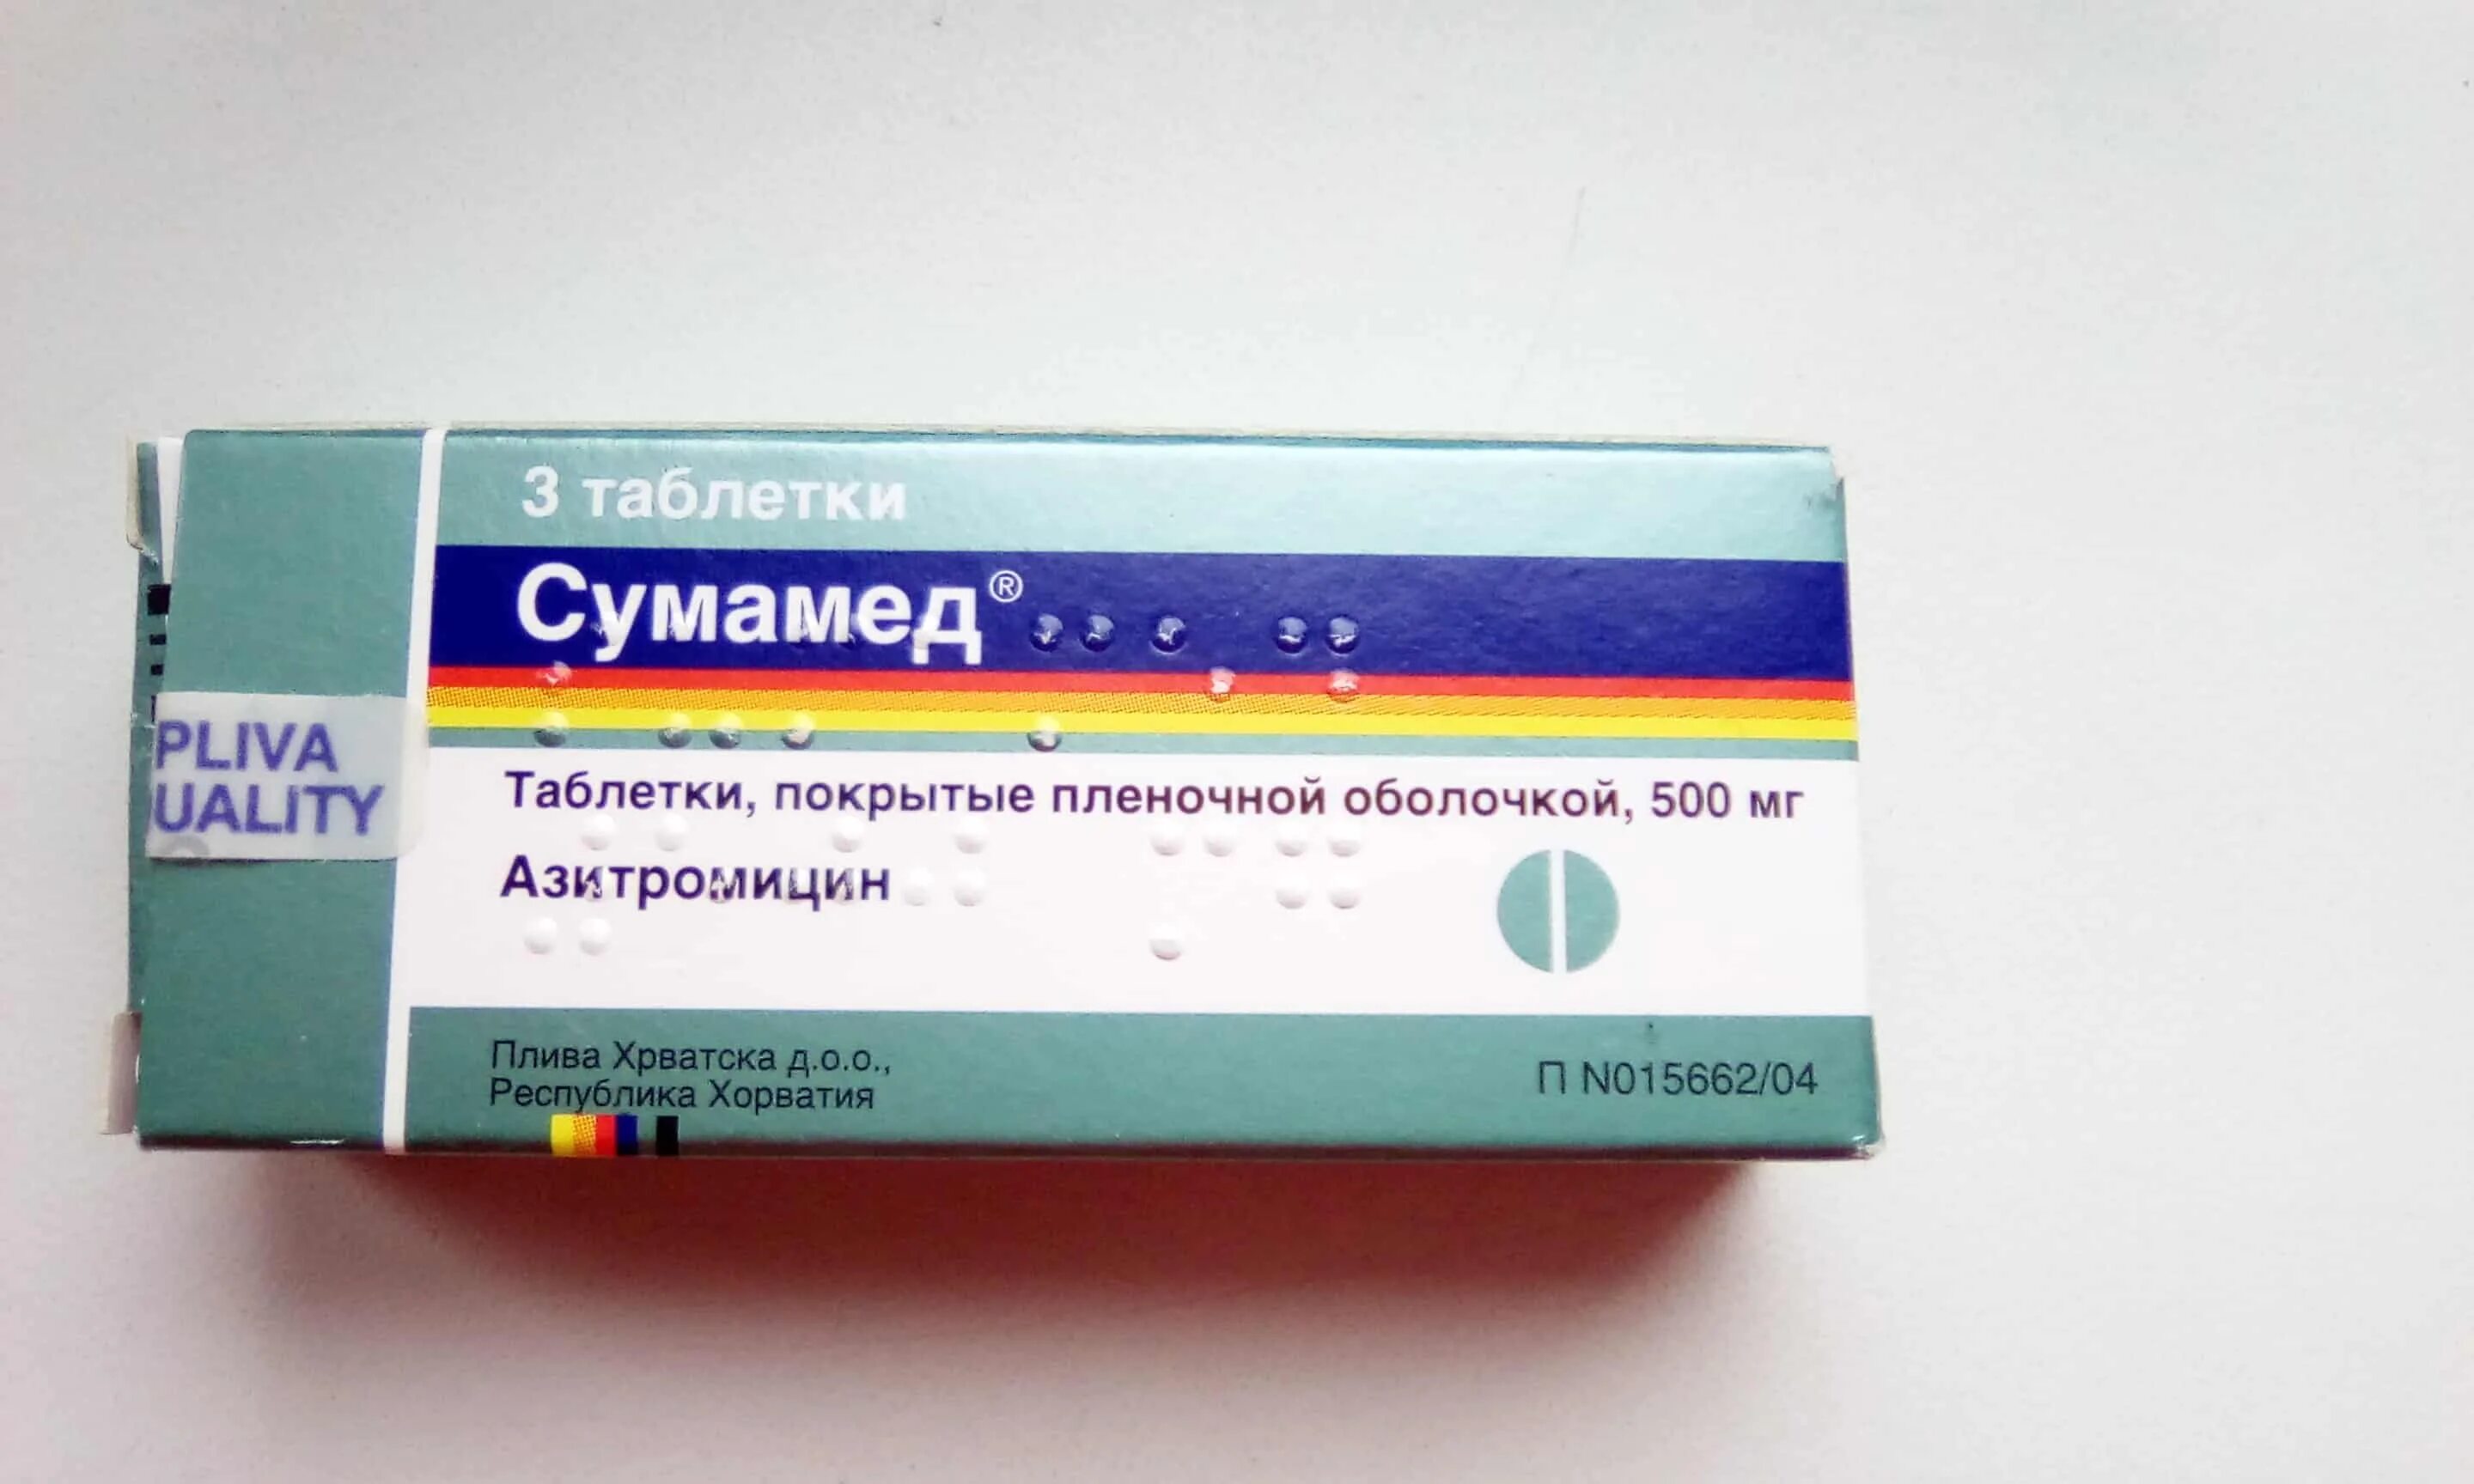 Какие антибиотики принимать. Антибиотик Sumamed 3 таблетки. Антибиотик от гайморита 3 таблетки. Антибиотики при ангине у взрослого в таблетках 3 таблетки. Антибиотик при ангине взрослому 3 таблетки Сумамед.